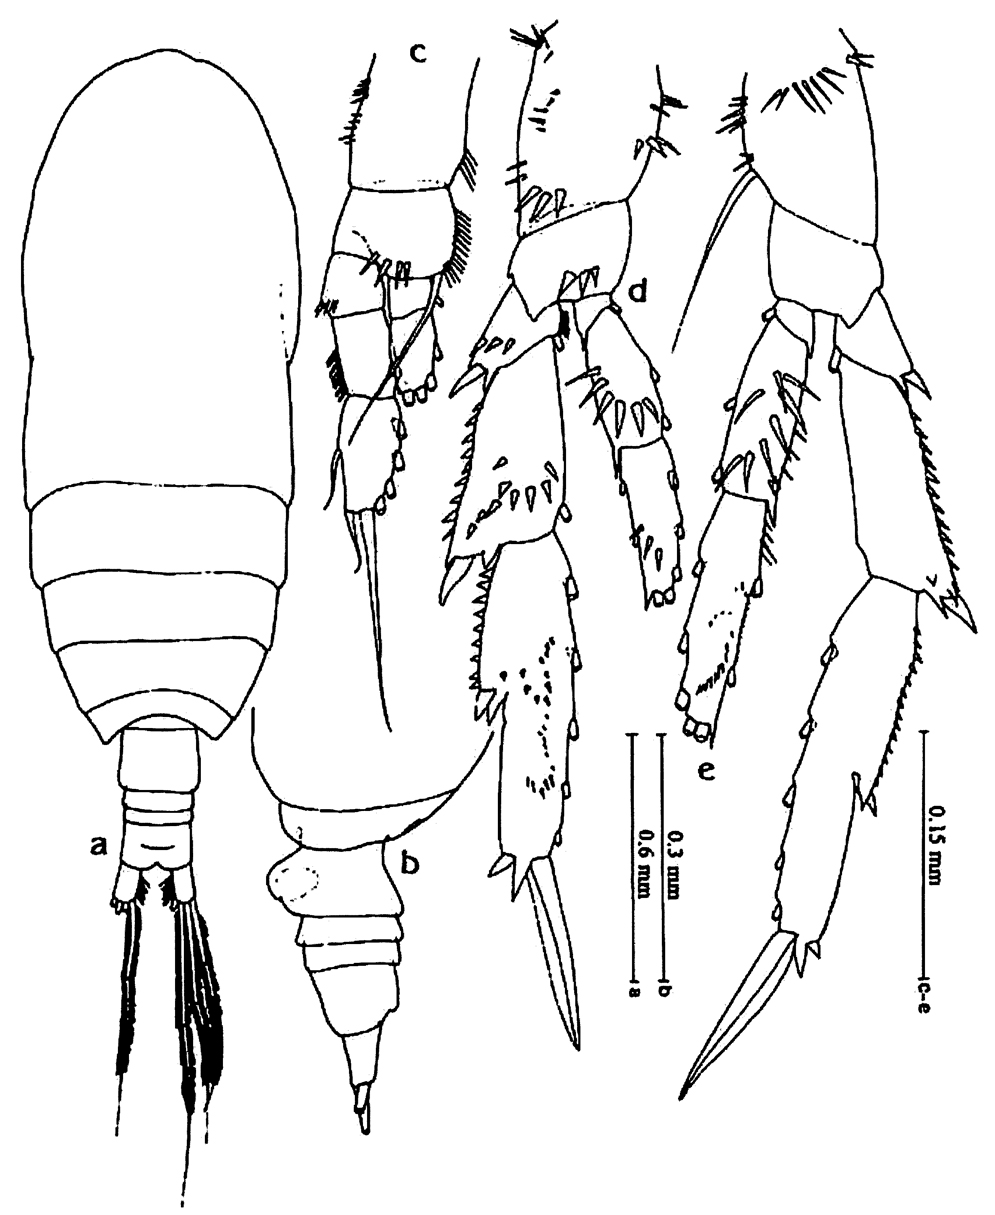 Species Acrocalanus gracilis - Plate 12 of morphological figures